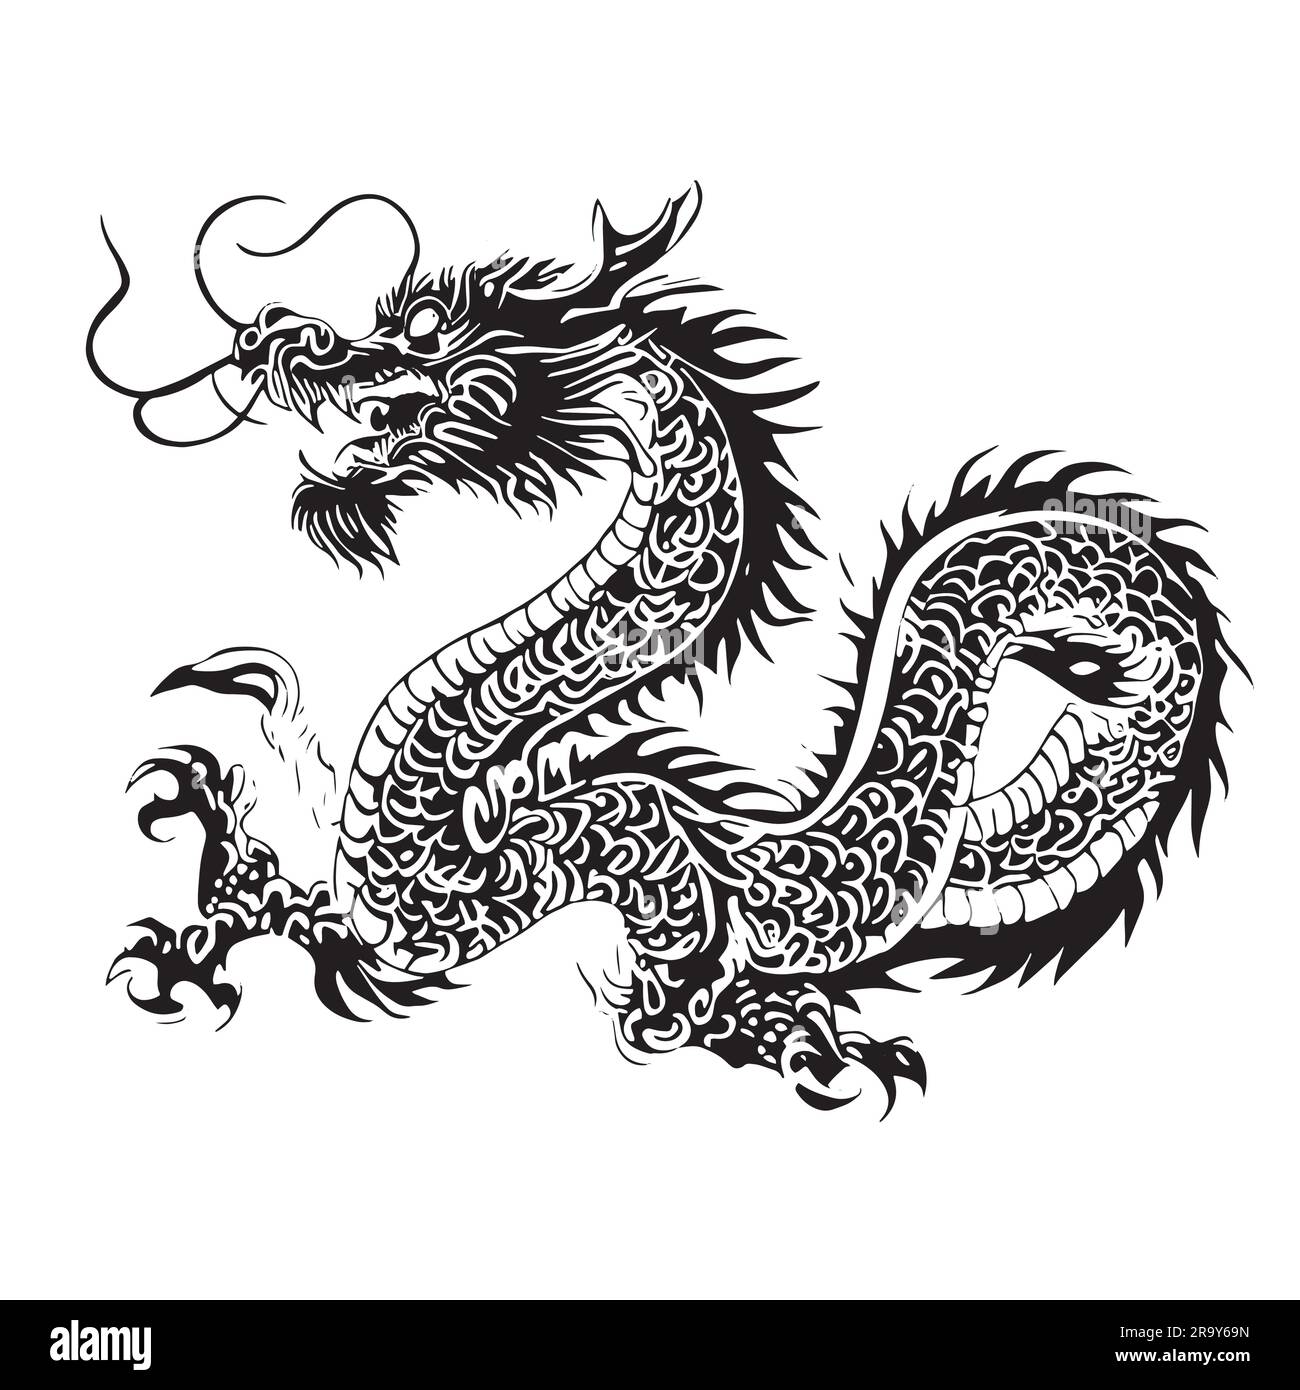 dragon yin yang - Google Search  Ilustraciones de tatuajes, Tatuajes  blancos, Illustration